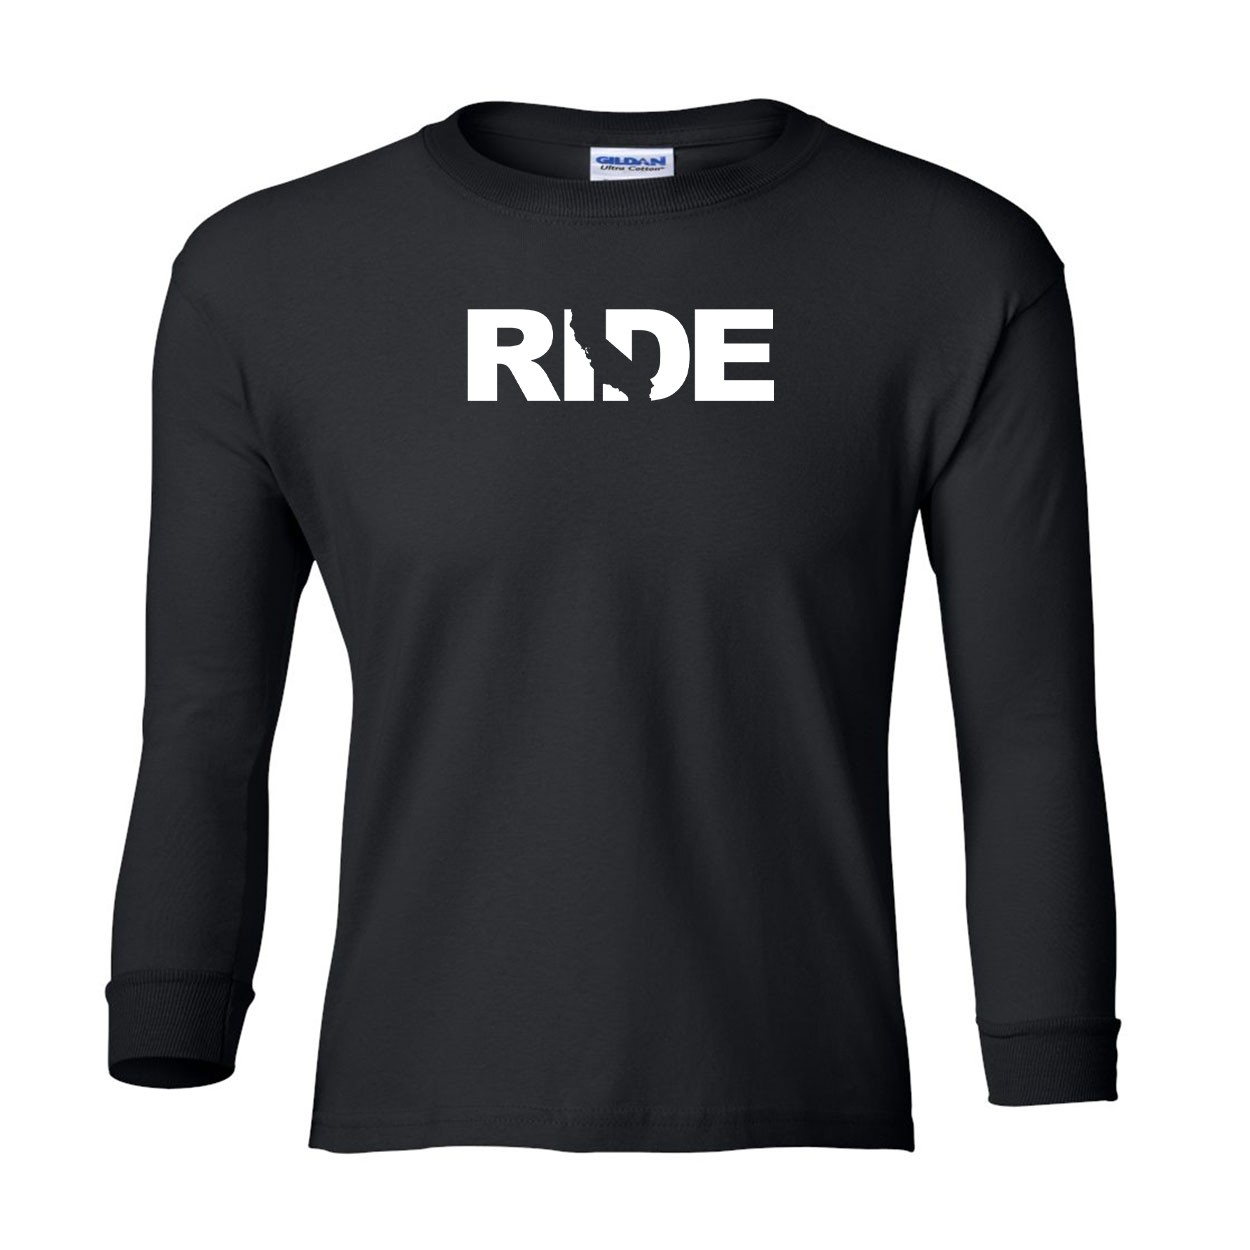 Ride California Classic Youth Unisex Long Sleeve T-Shirt Black (White Logo)